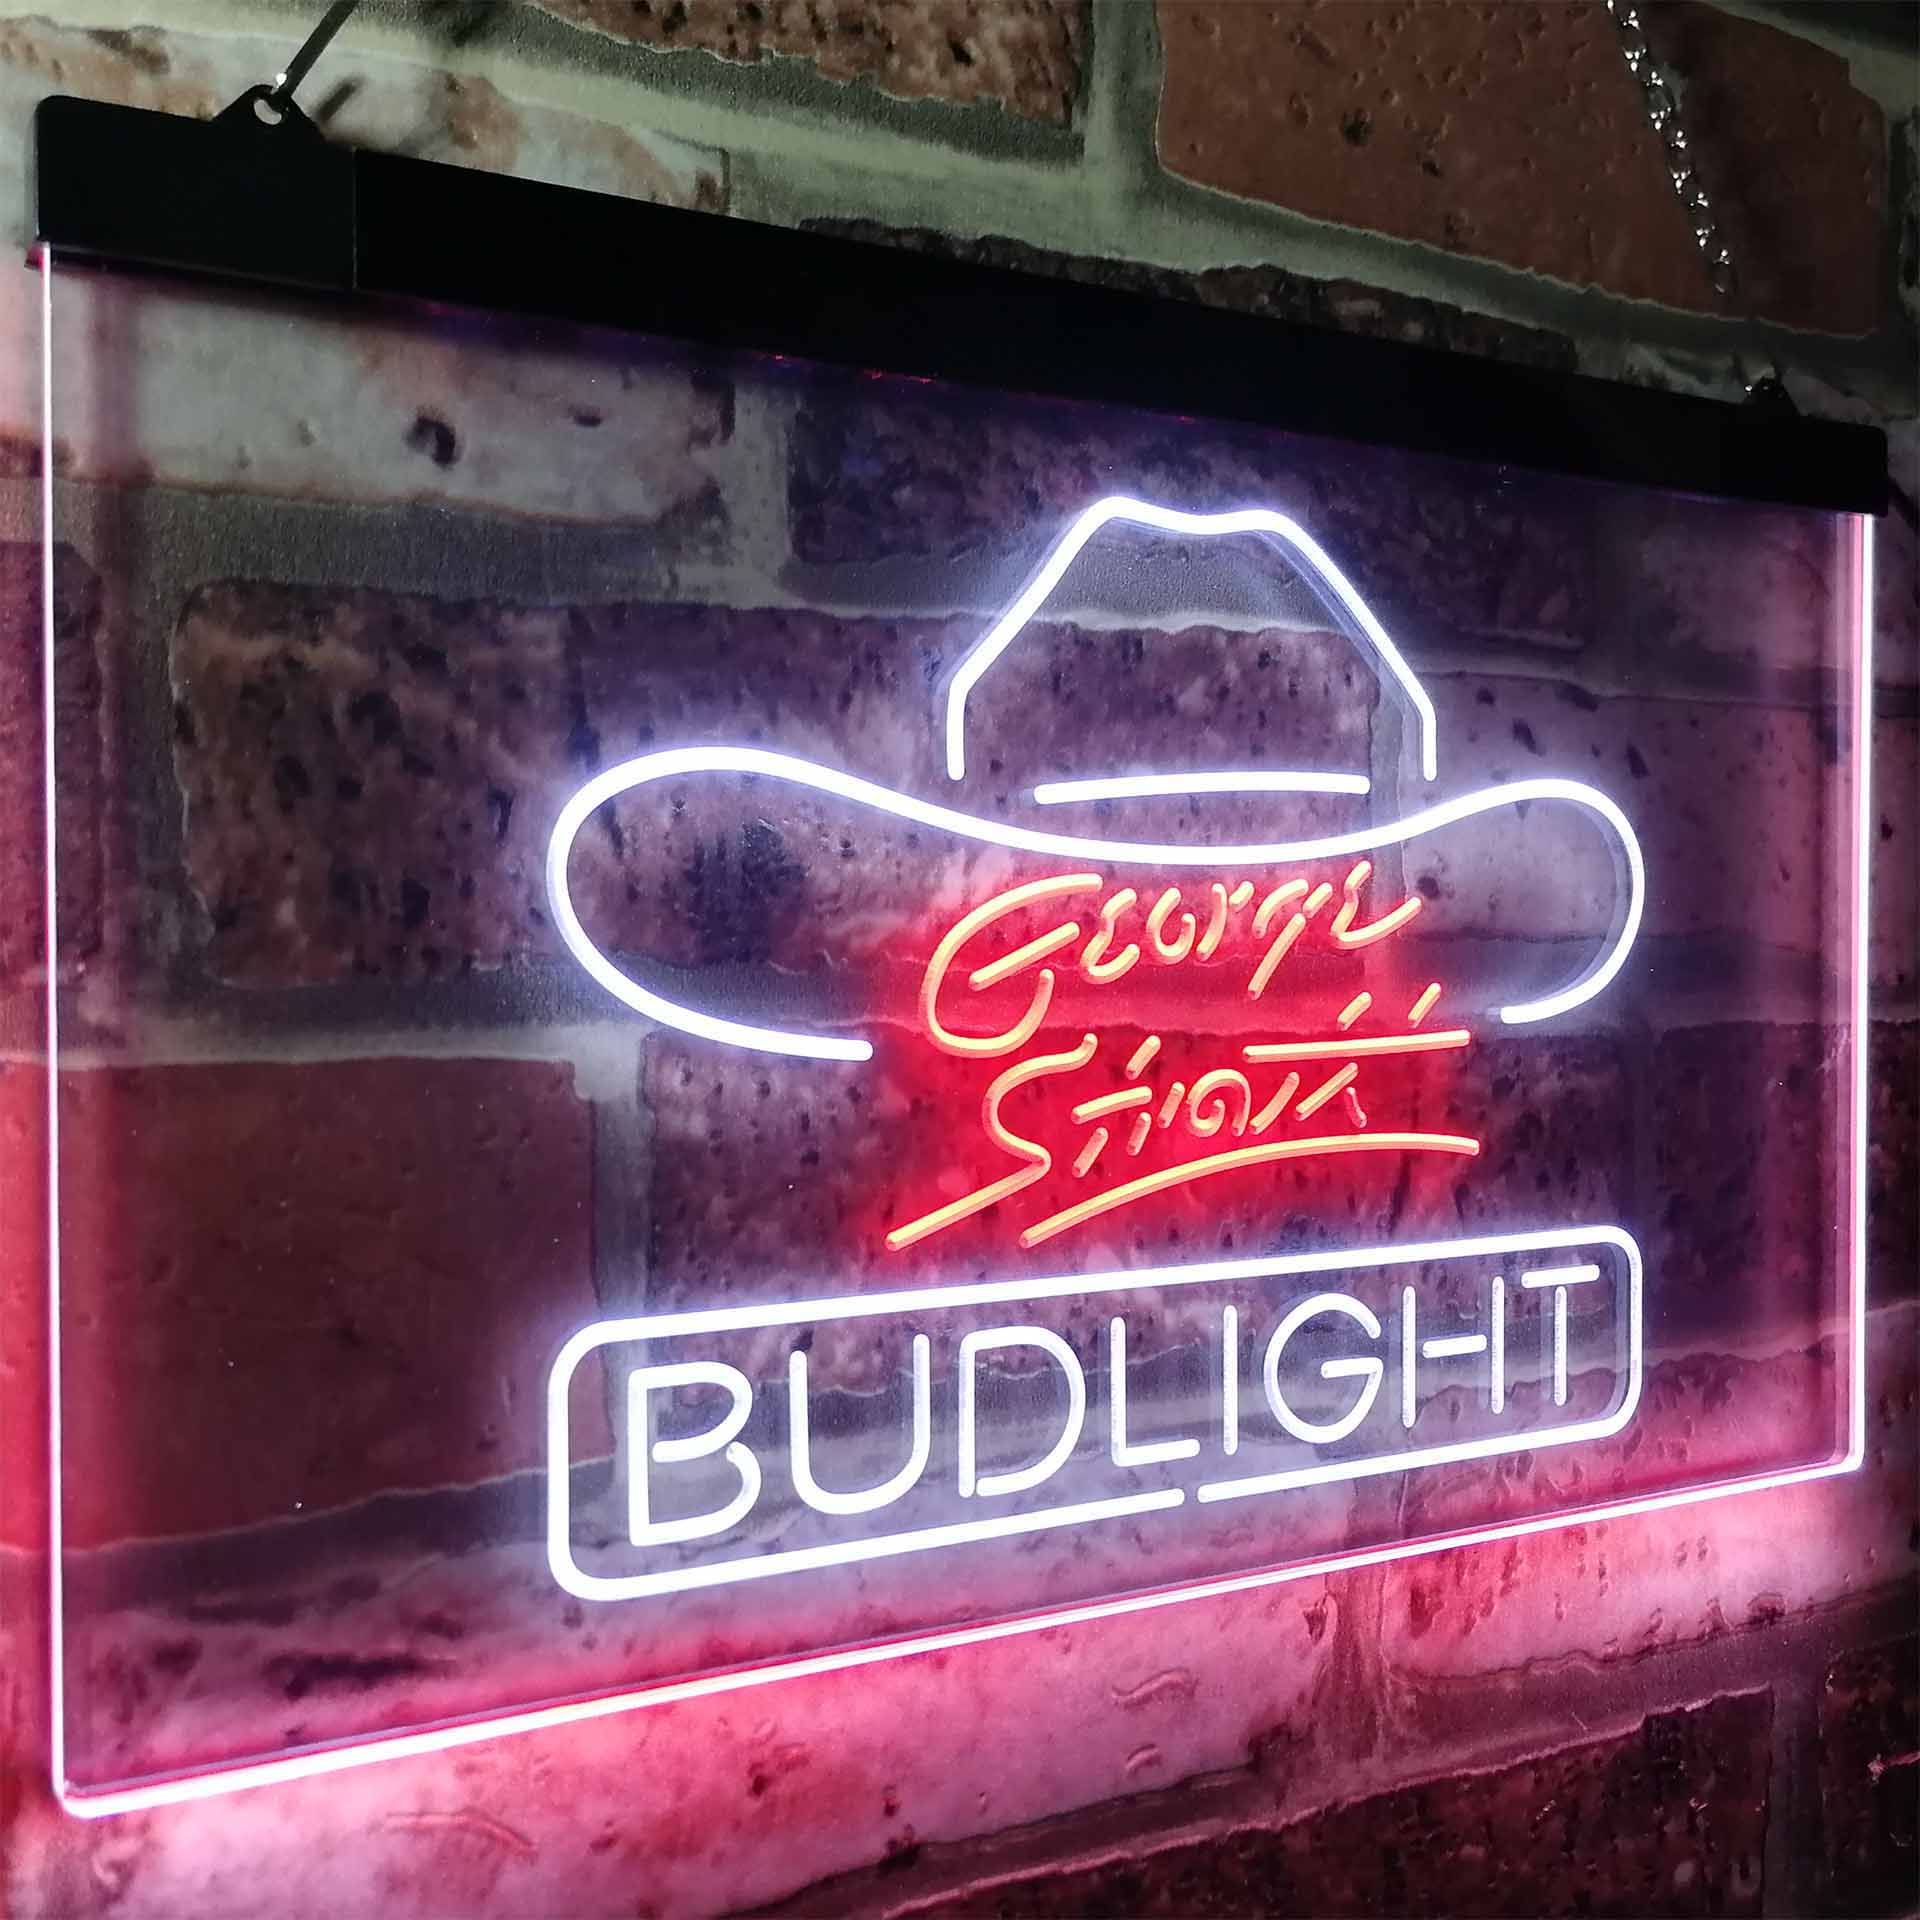 George Strait Buds Light Music Beer Bar Decor LED Neon Sign